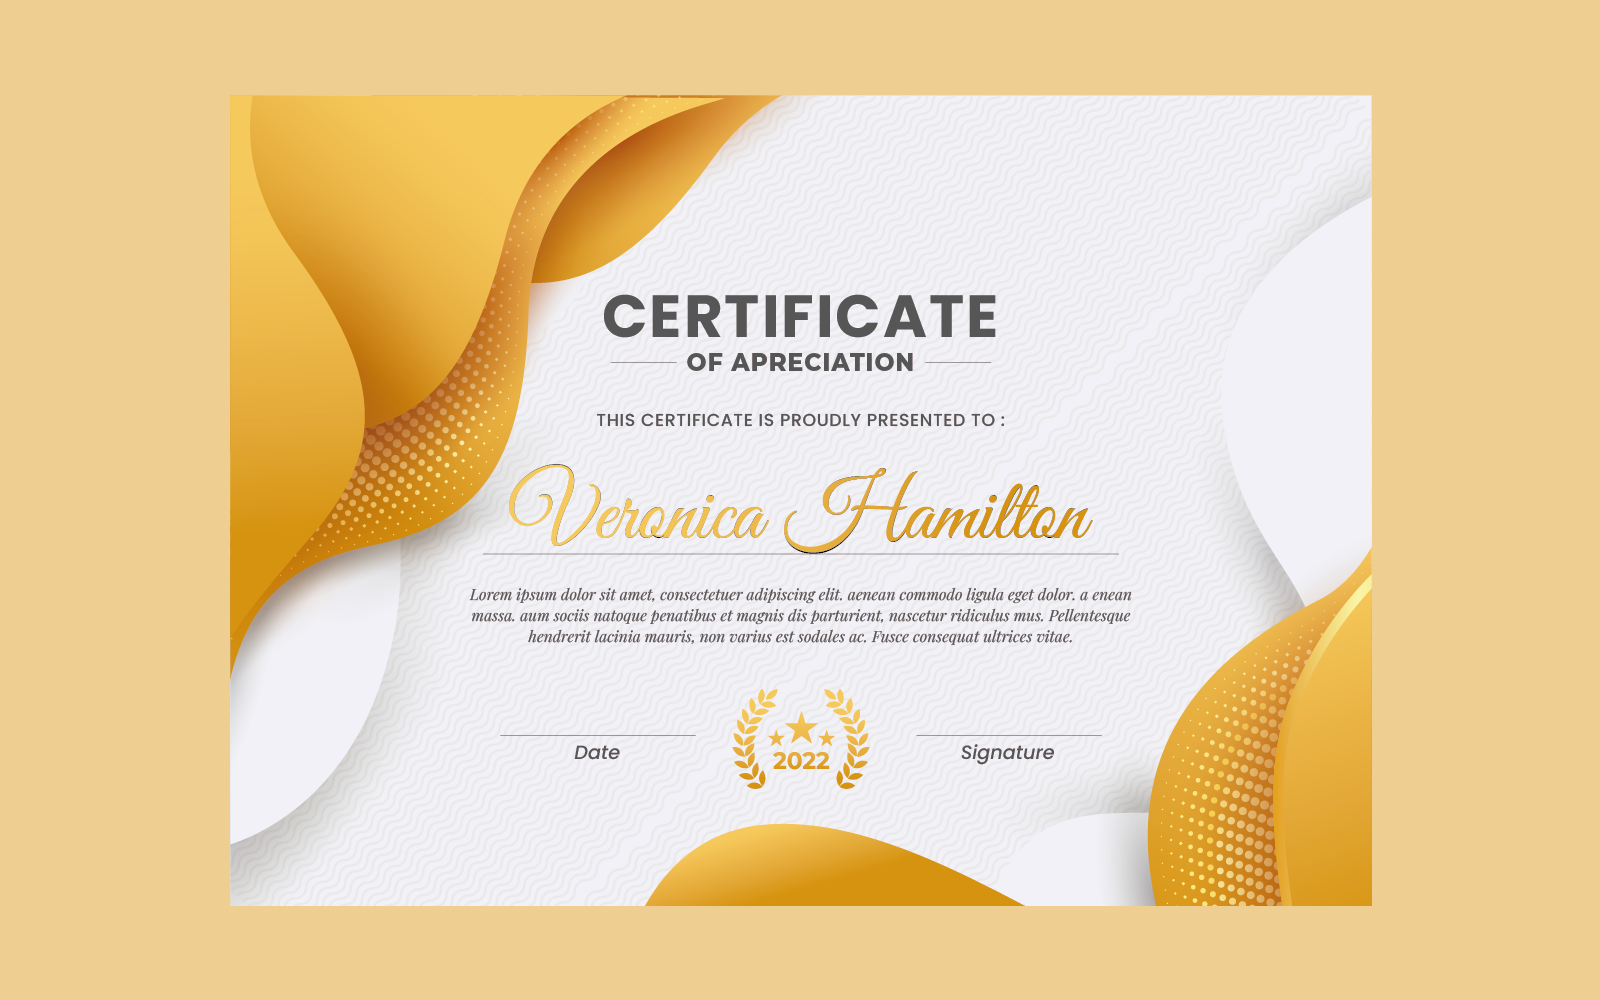 Veronica Hamilton - Certificate of Appreciation Template